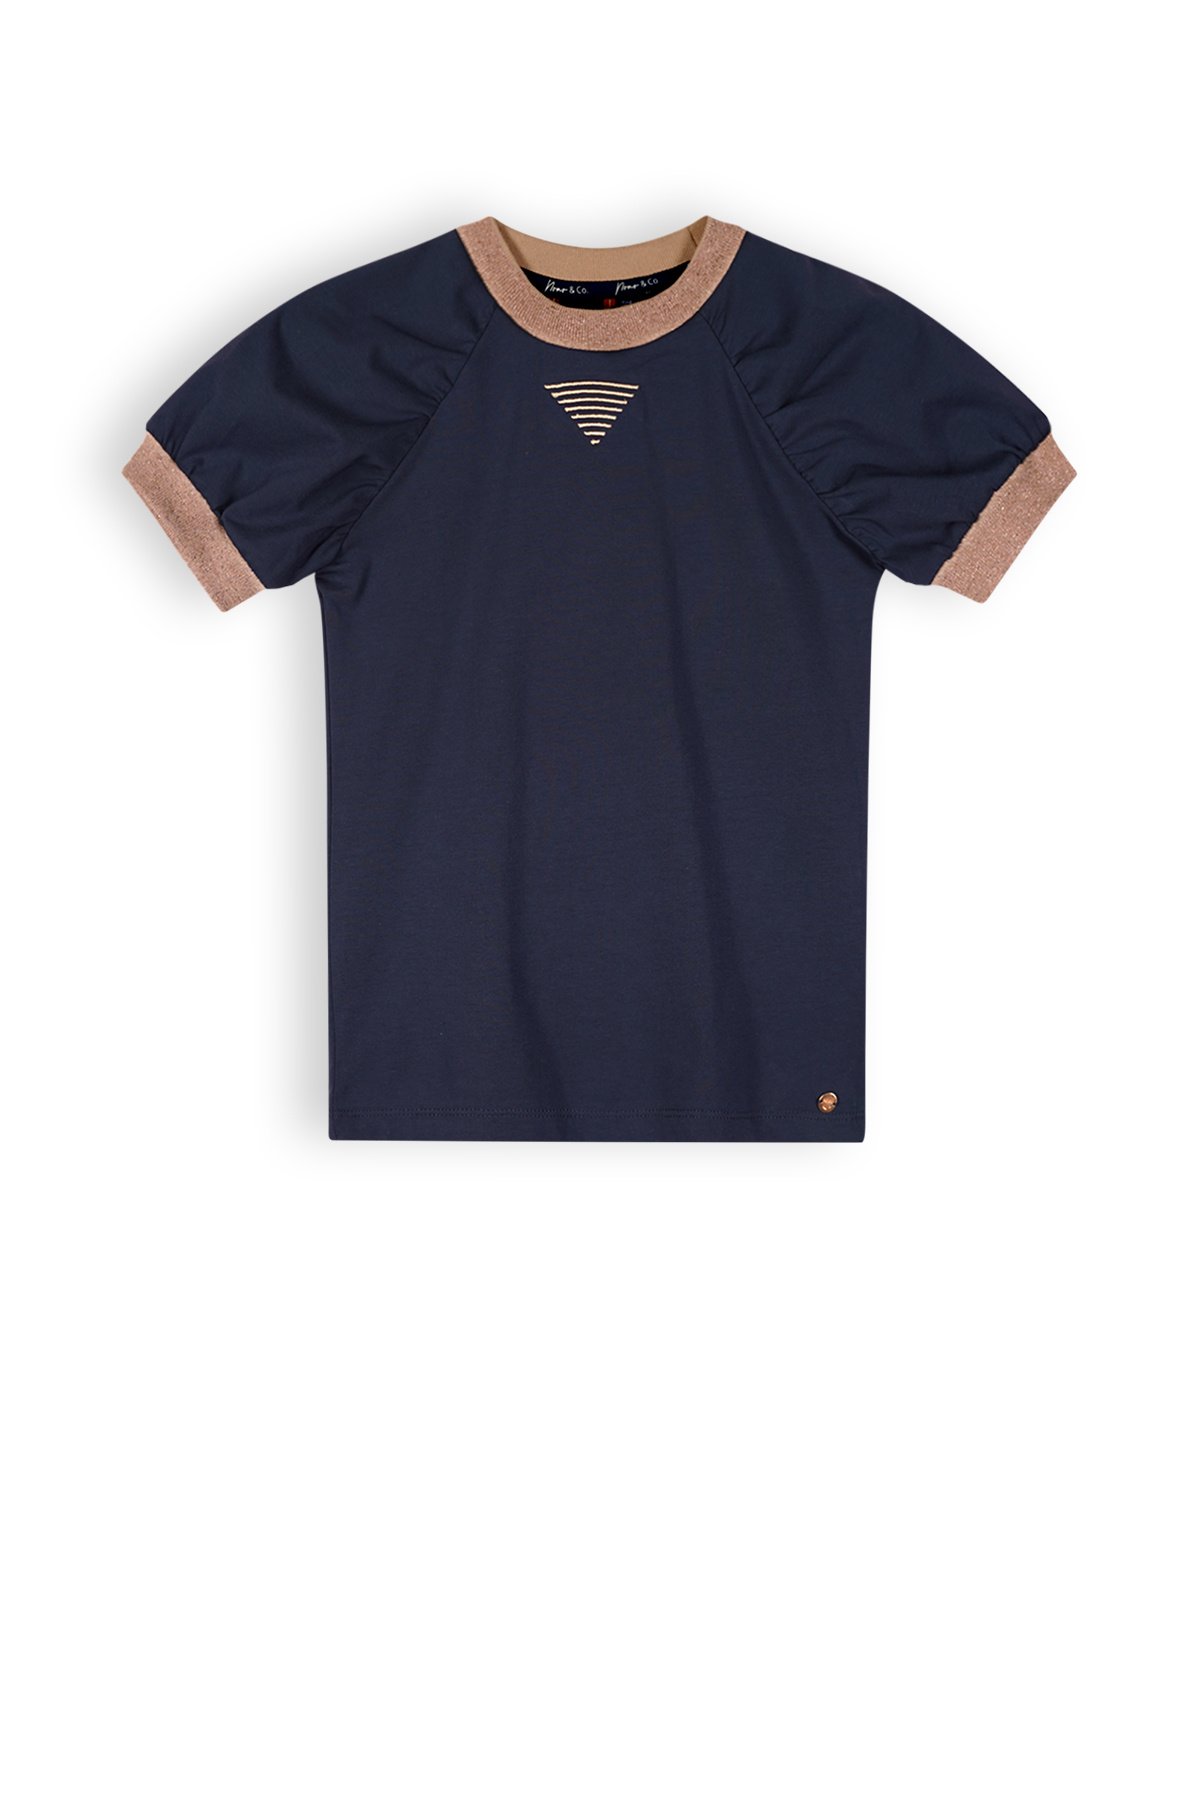 Meisjes t-shirt - Kayla - Navy blauw